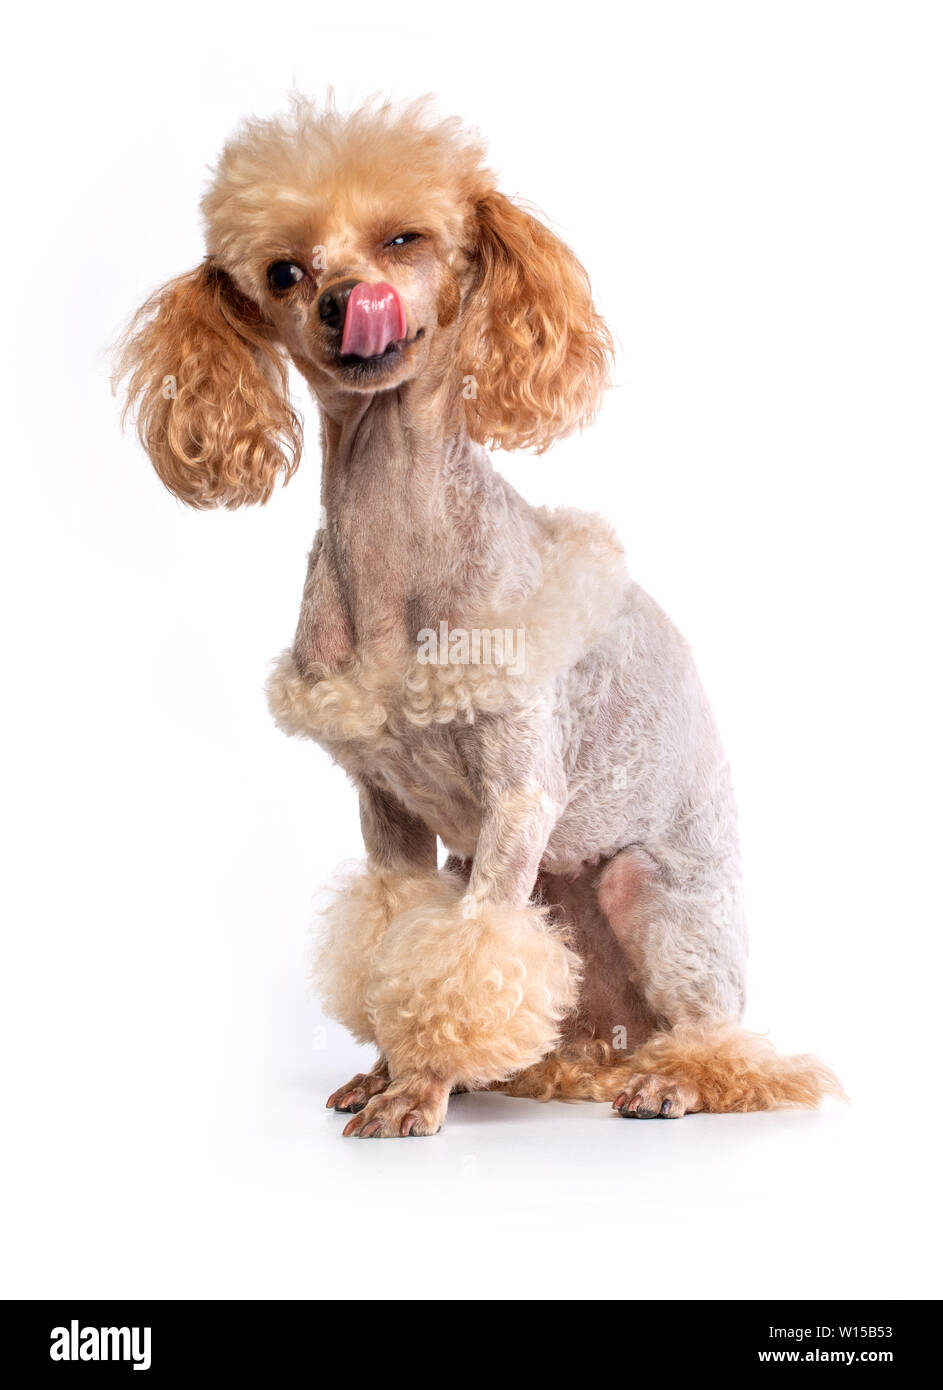 Groomed Toy Poodle posing on white background Stock Photo - Alamy